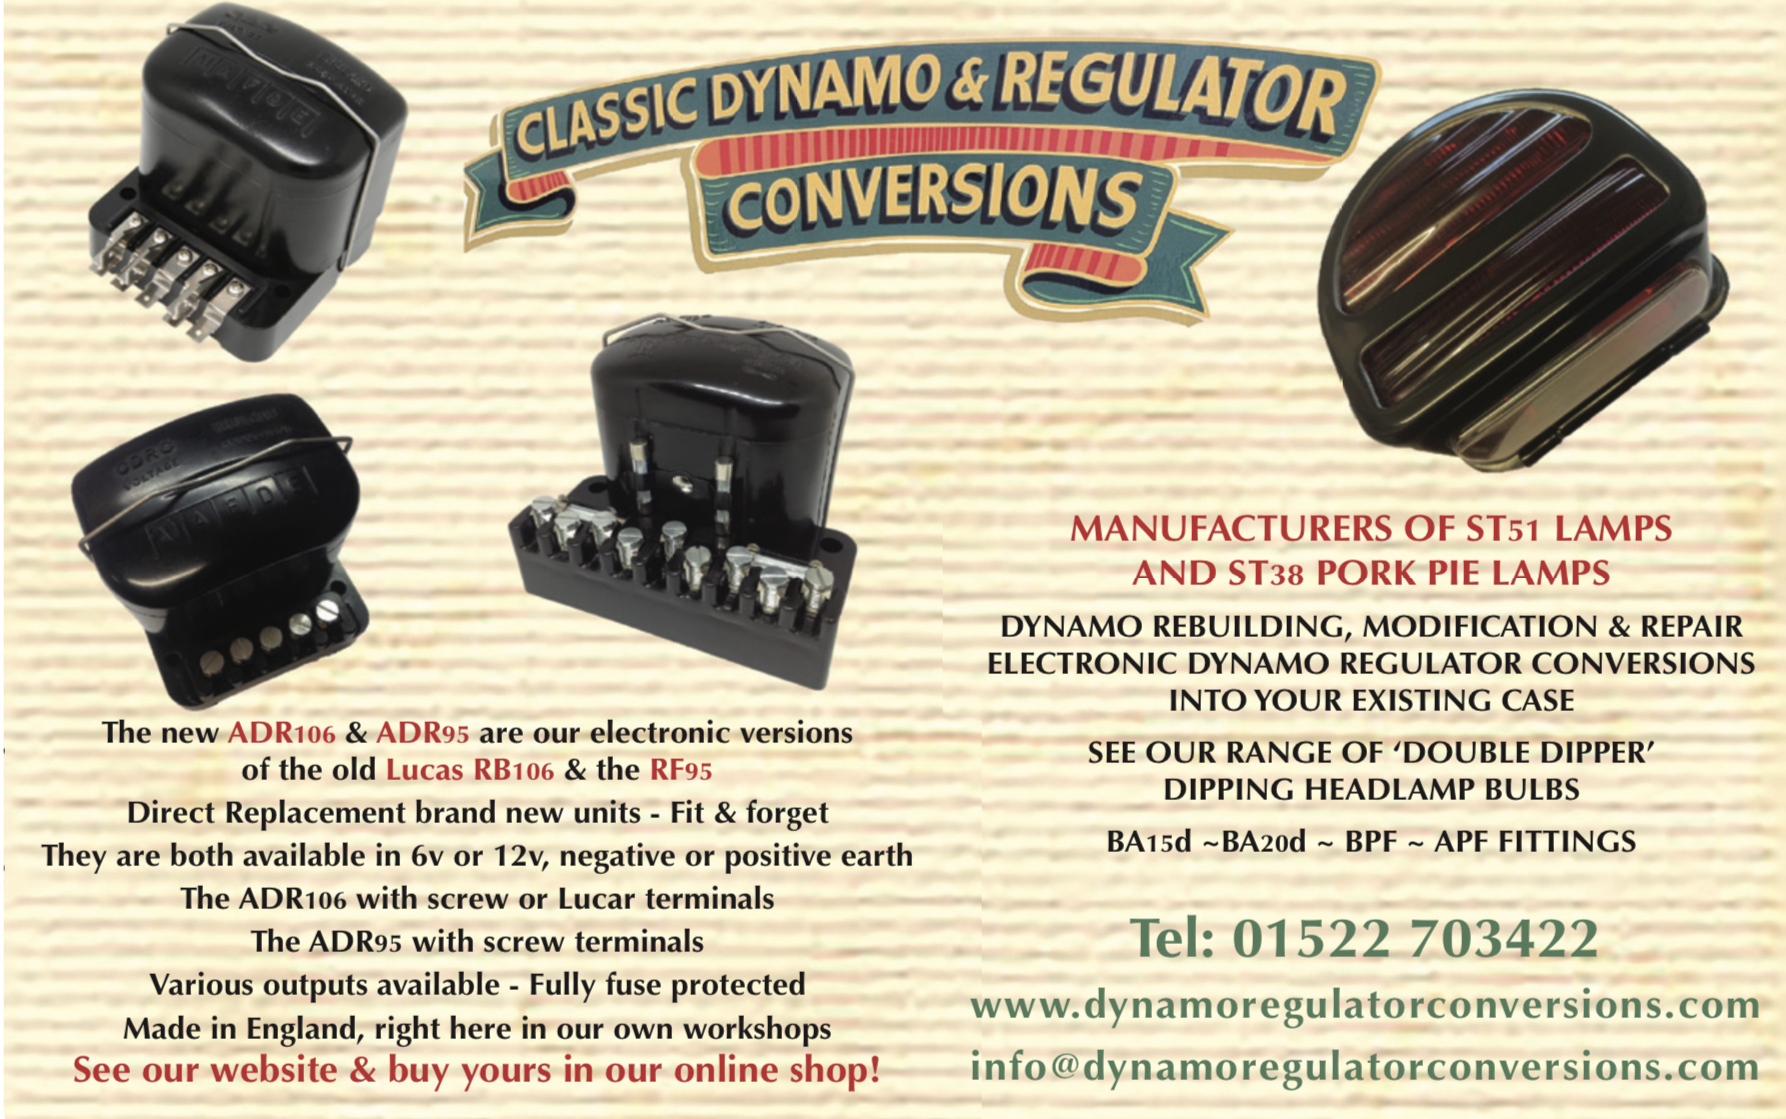 CLASSIC DYNAMO & REGULATOR CONVERSIONS - Dynamo and regulator conversions and lamp manufacturers,